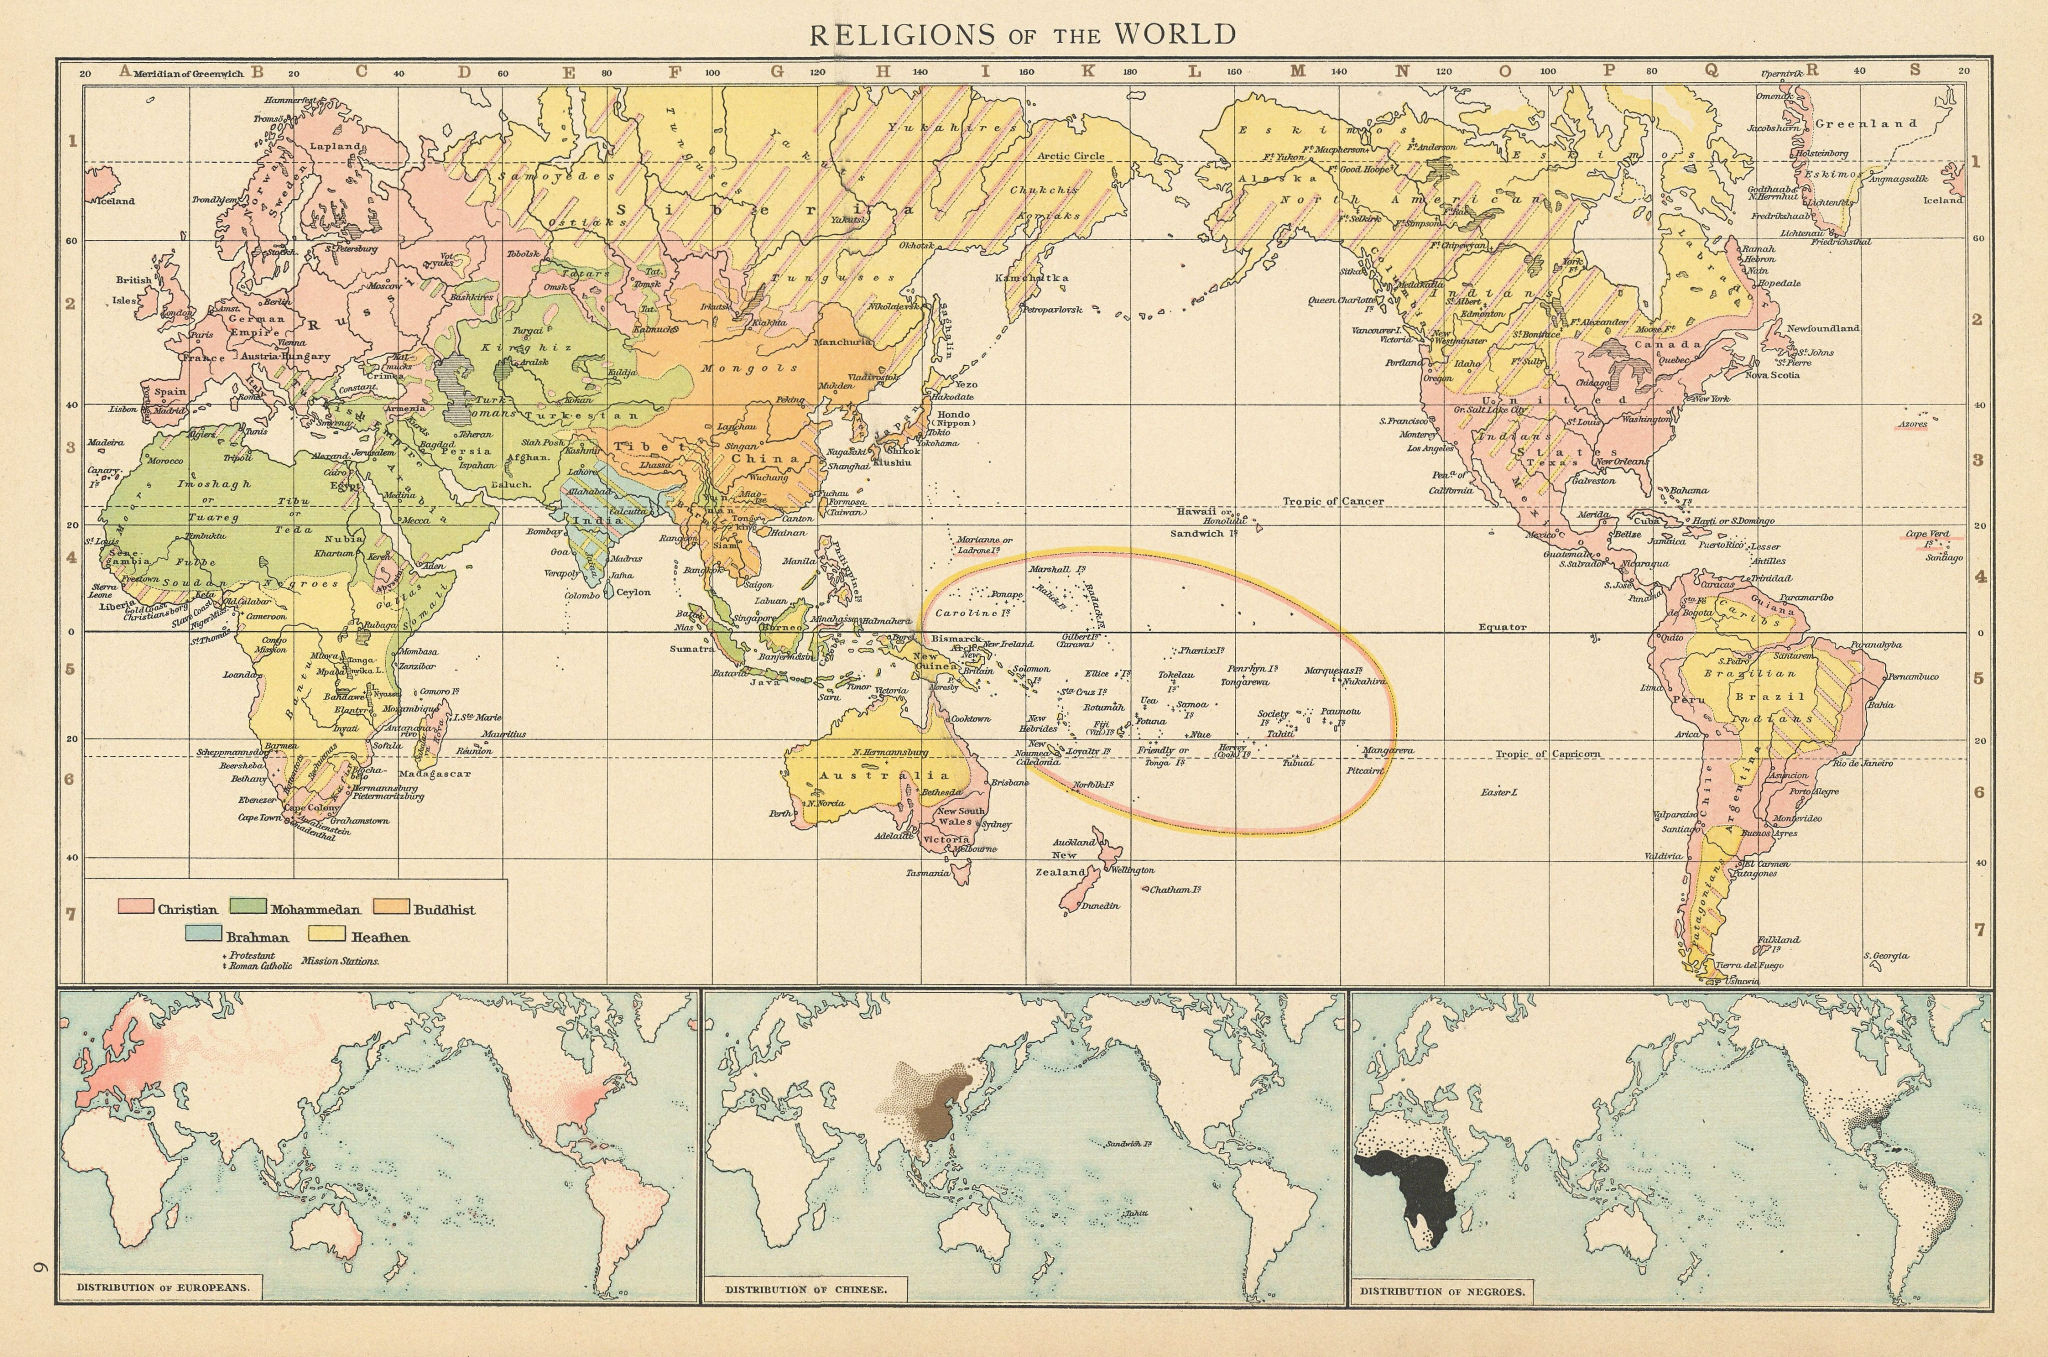 Religions of the world. Christian Islam Buddhist Heathen Hindu. TIMES 1895 map